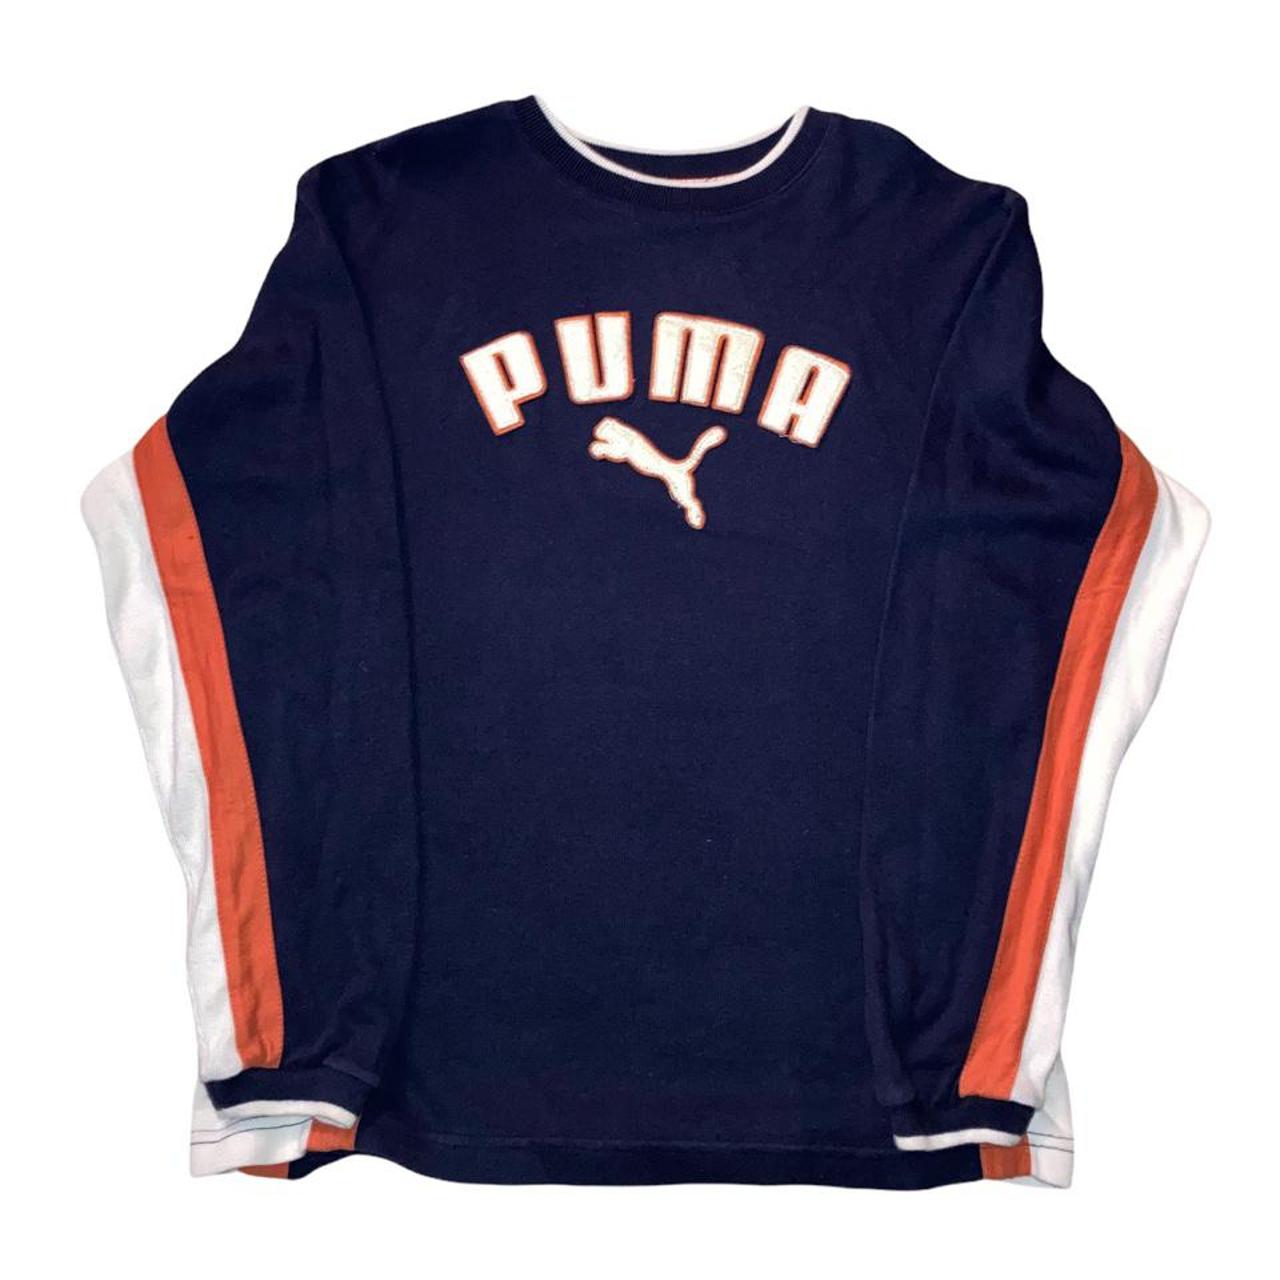 Vintage Puma Sweatshirt Navy/Orange/White Small - Depop